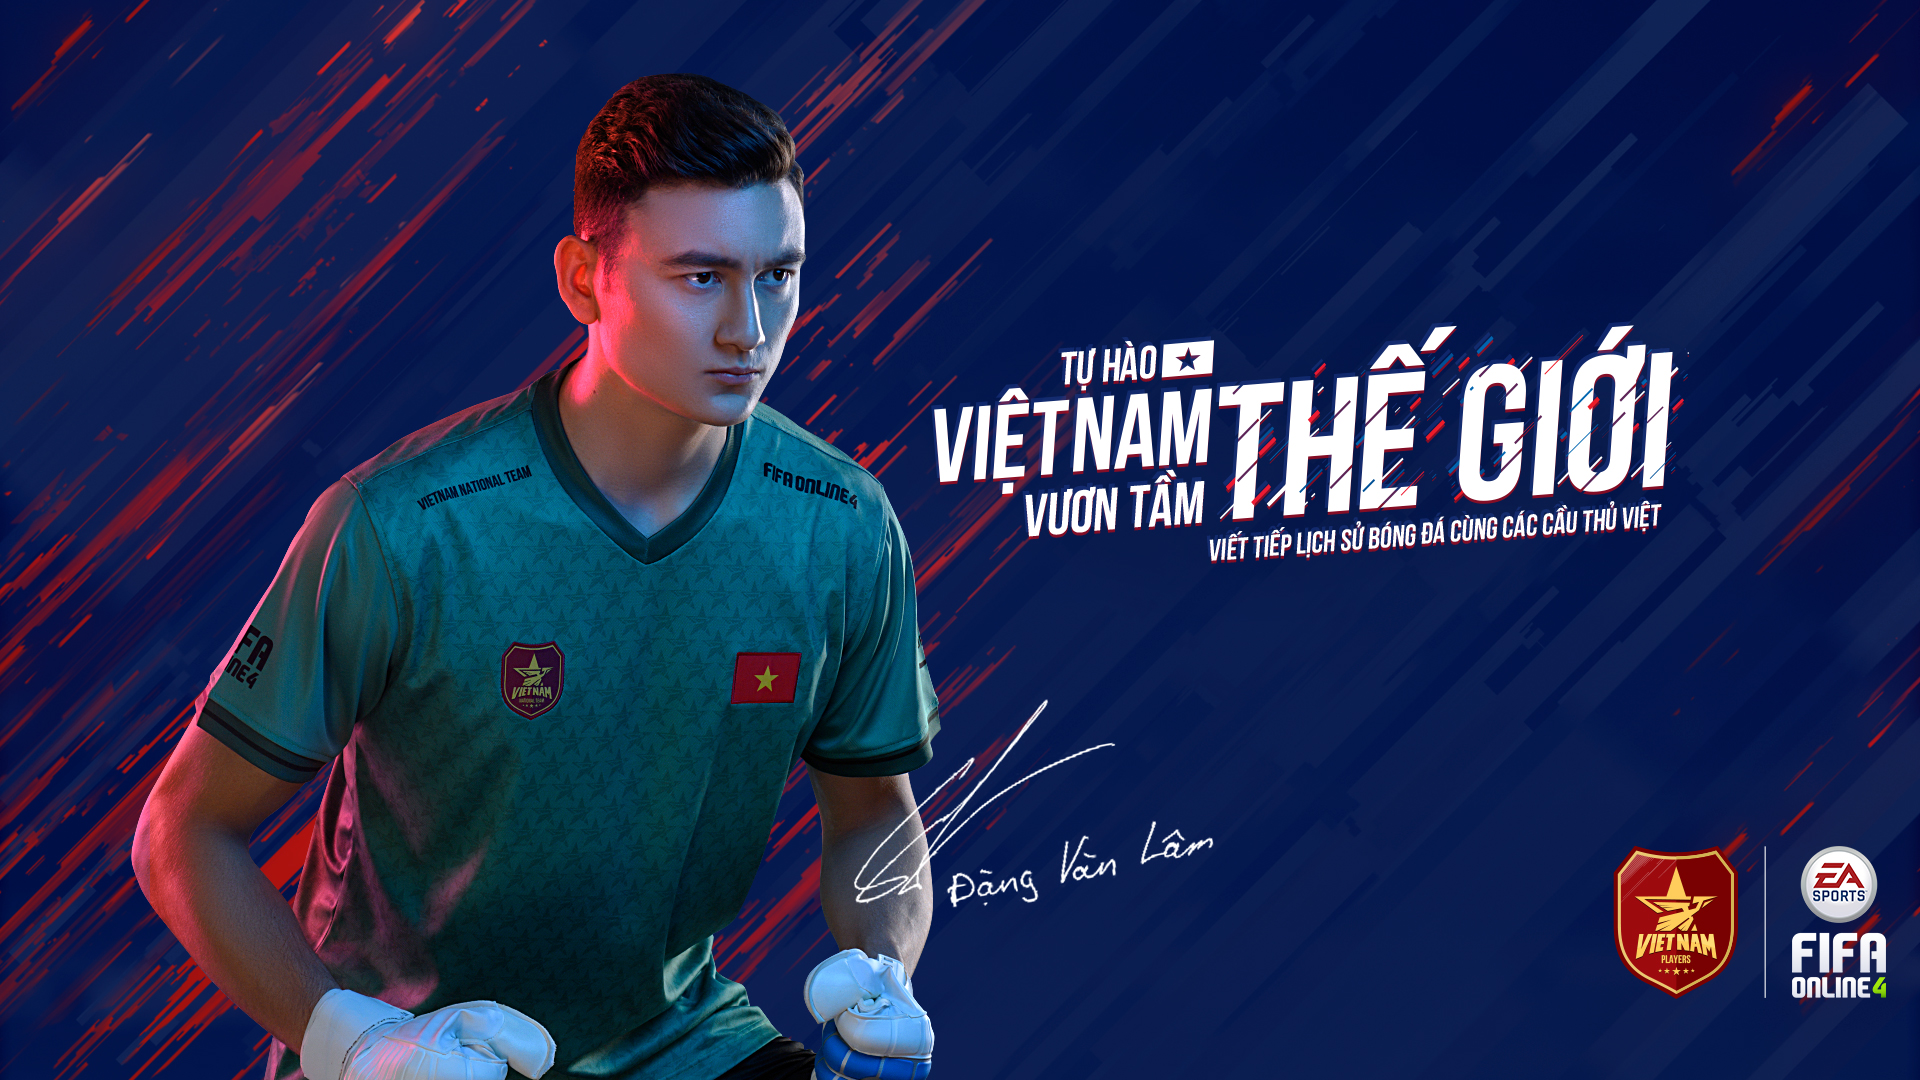 General 1920x1080 Vietnam Vietnam Football Dang Van Lam Football Player